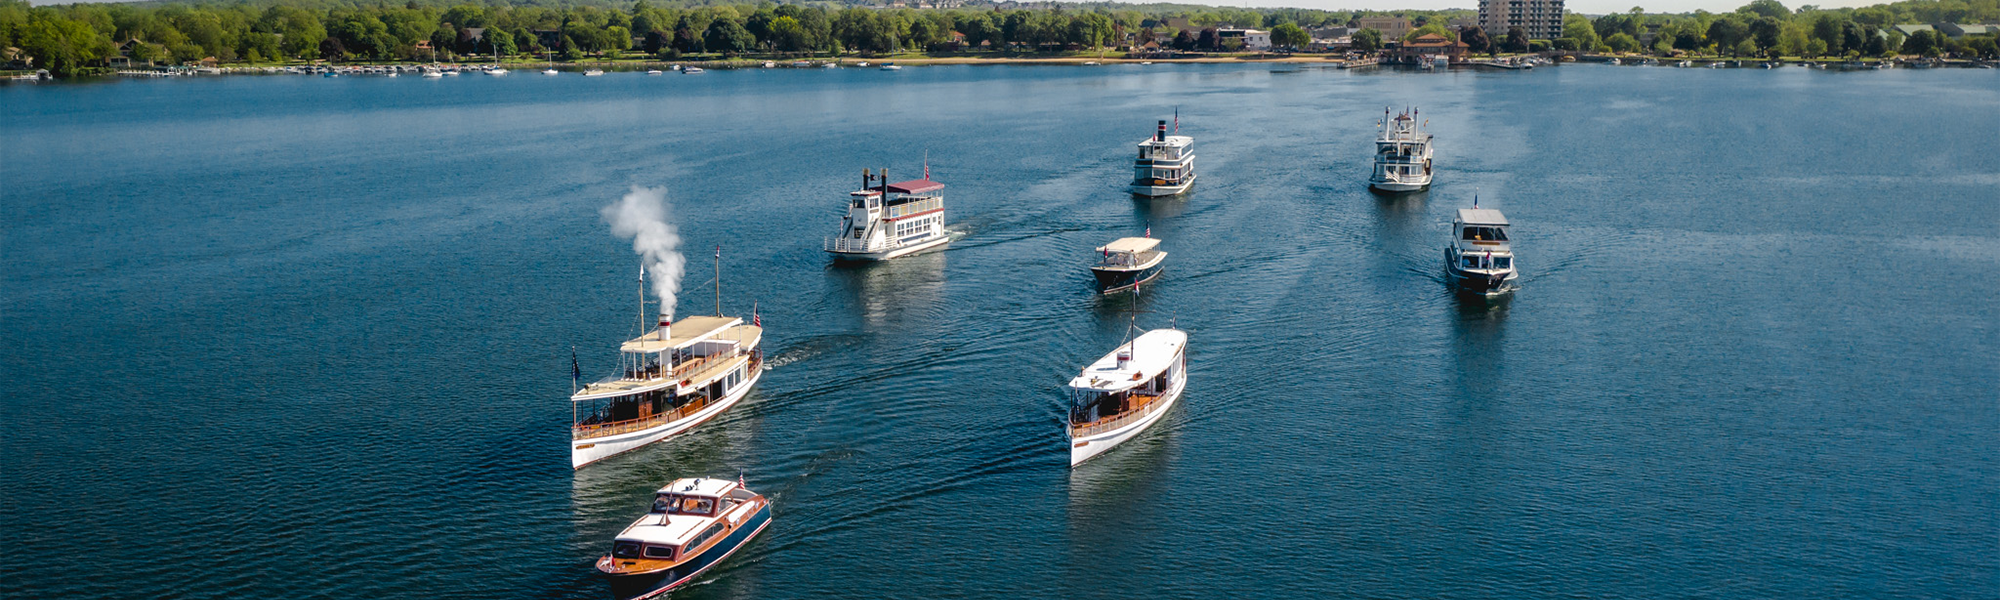 Lake Geneva Cruise Line fleet on the water